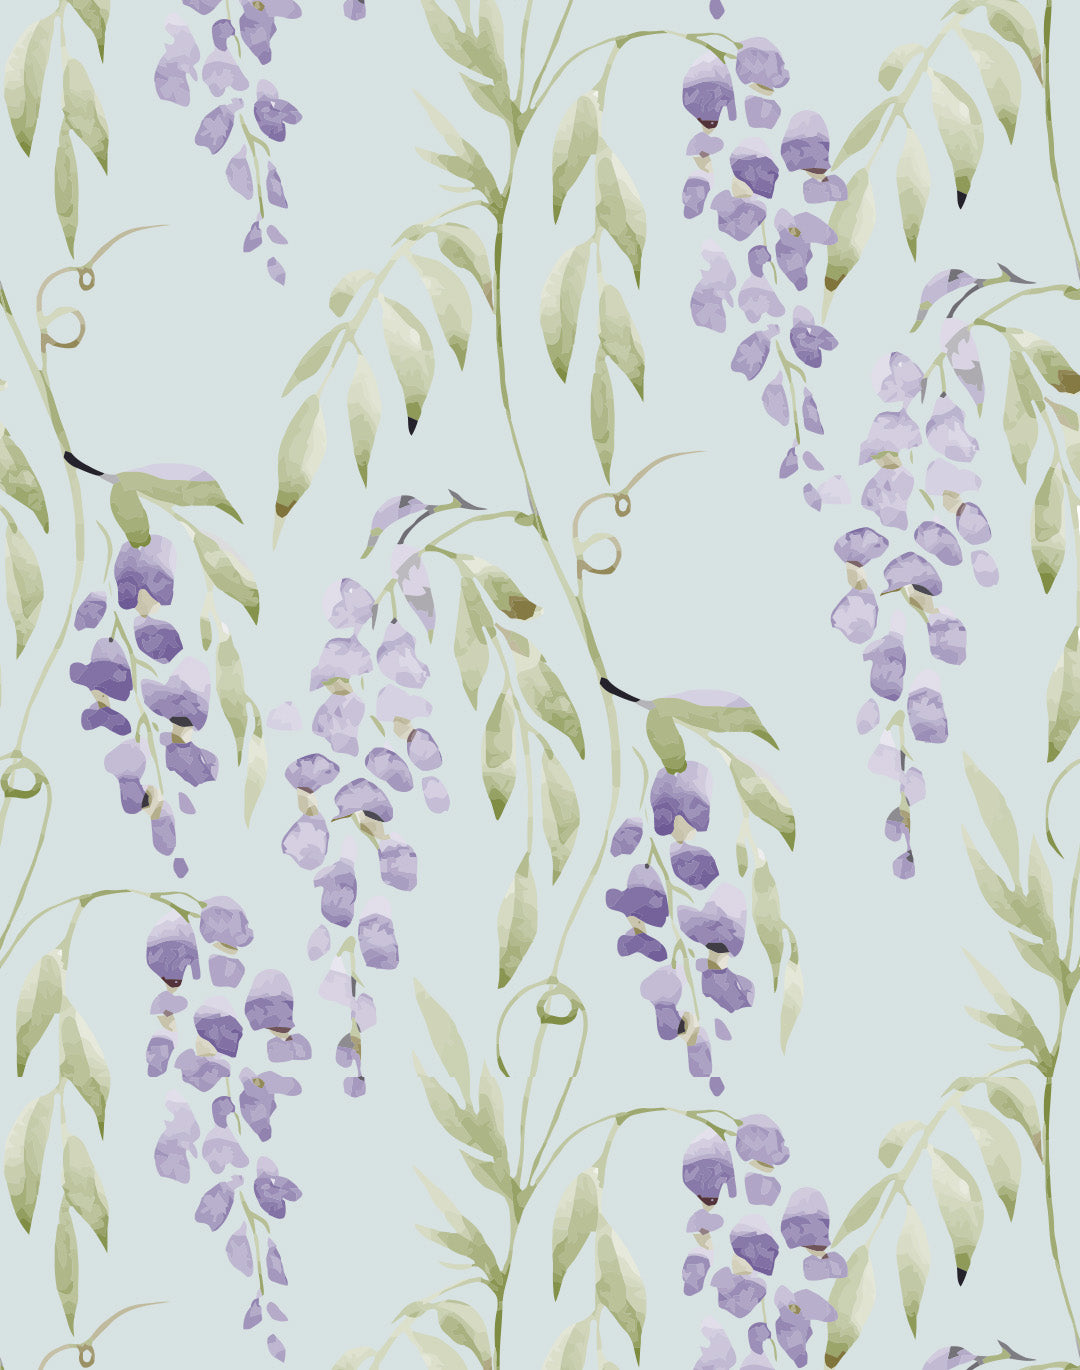 Wisteria Bleue - Floral Blue Vintage Wallpaper Roll Full Pattern